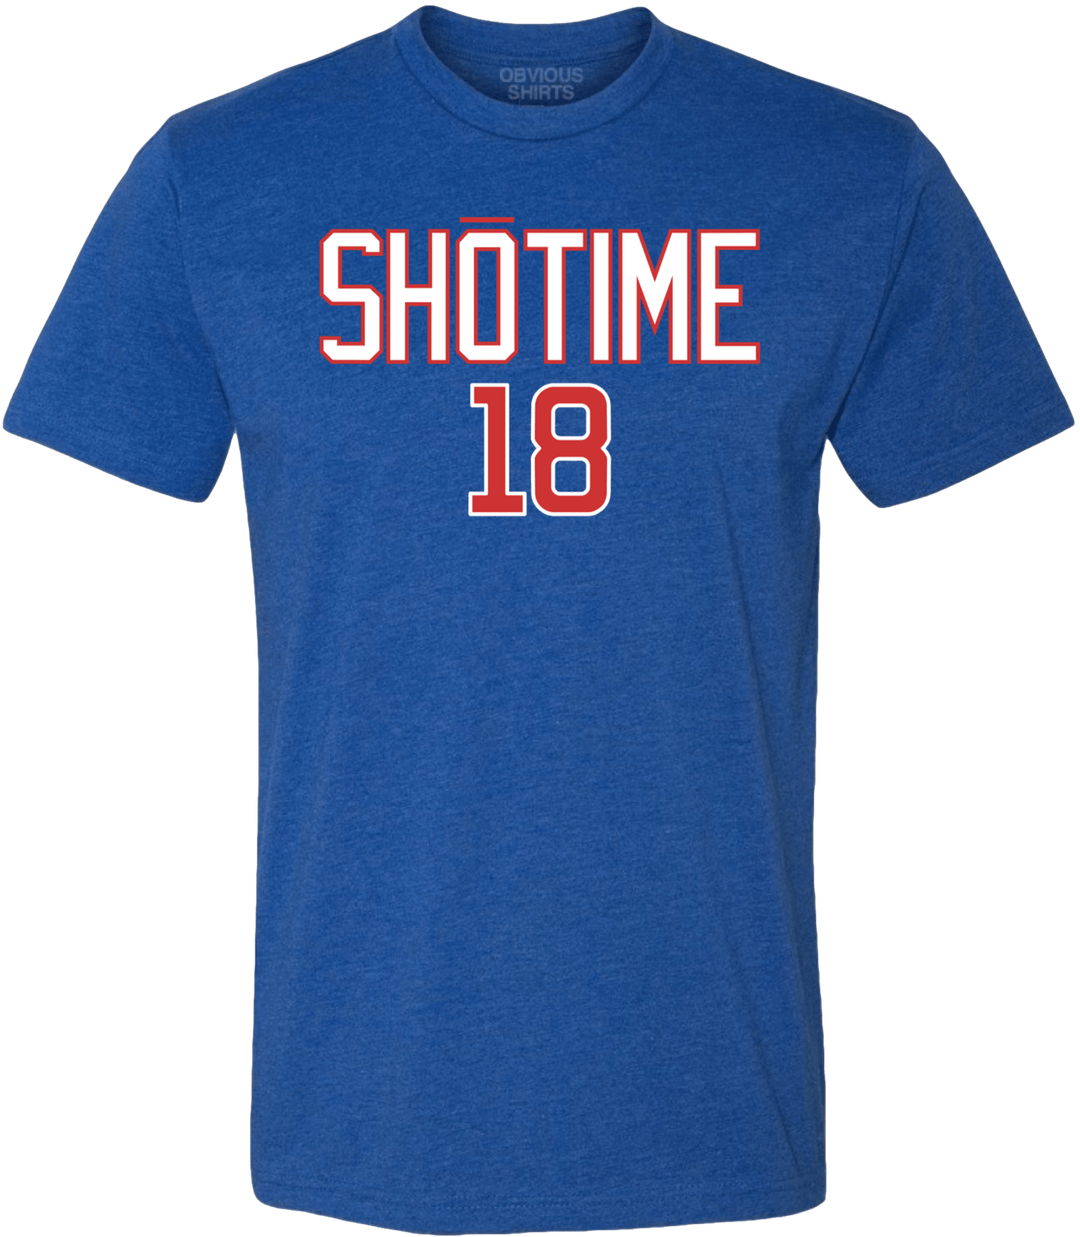 SHOTIME 18 - OBVIOUS SHIRTS